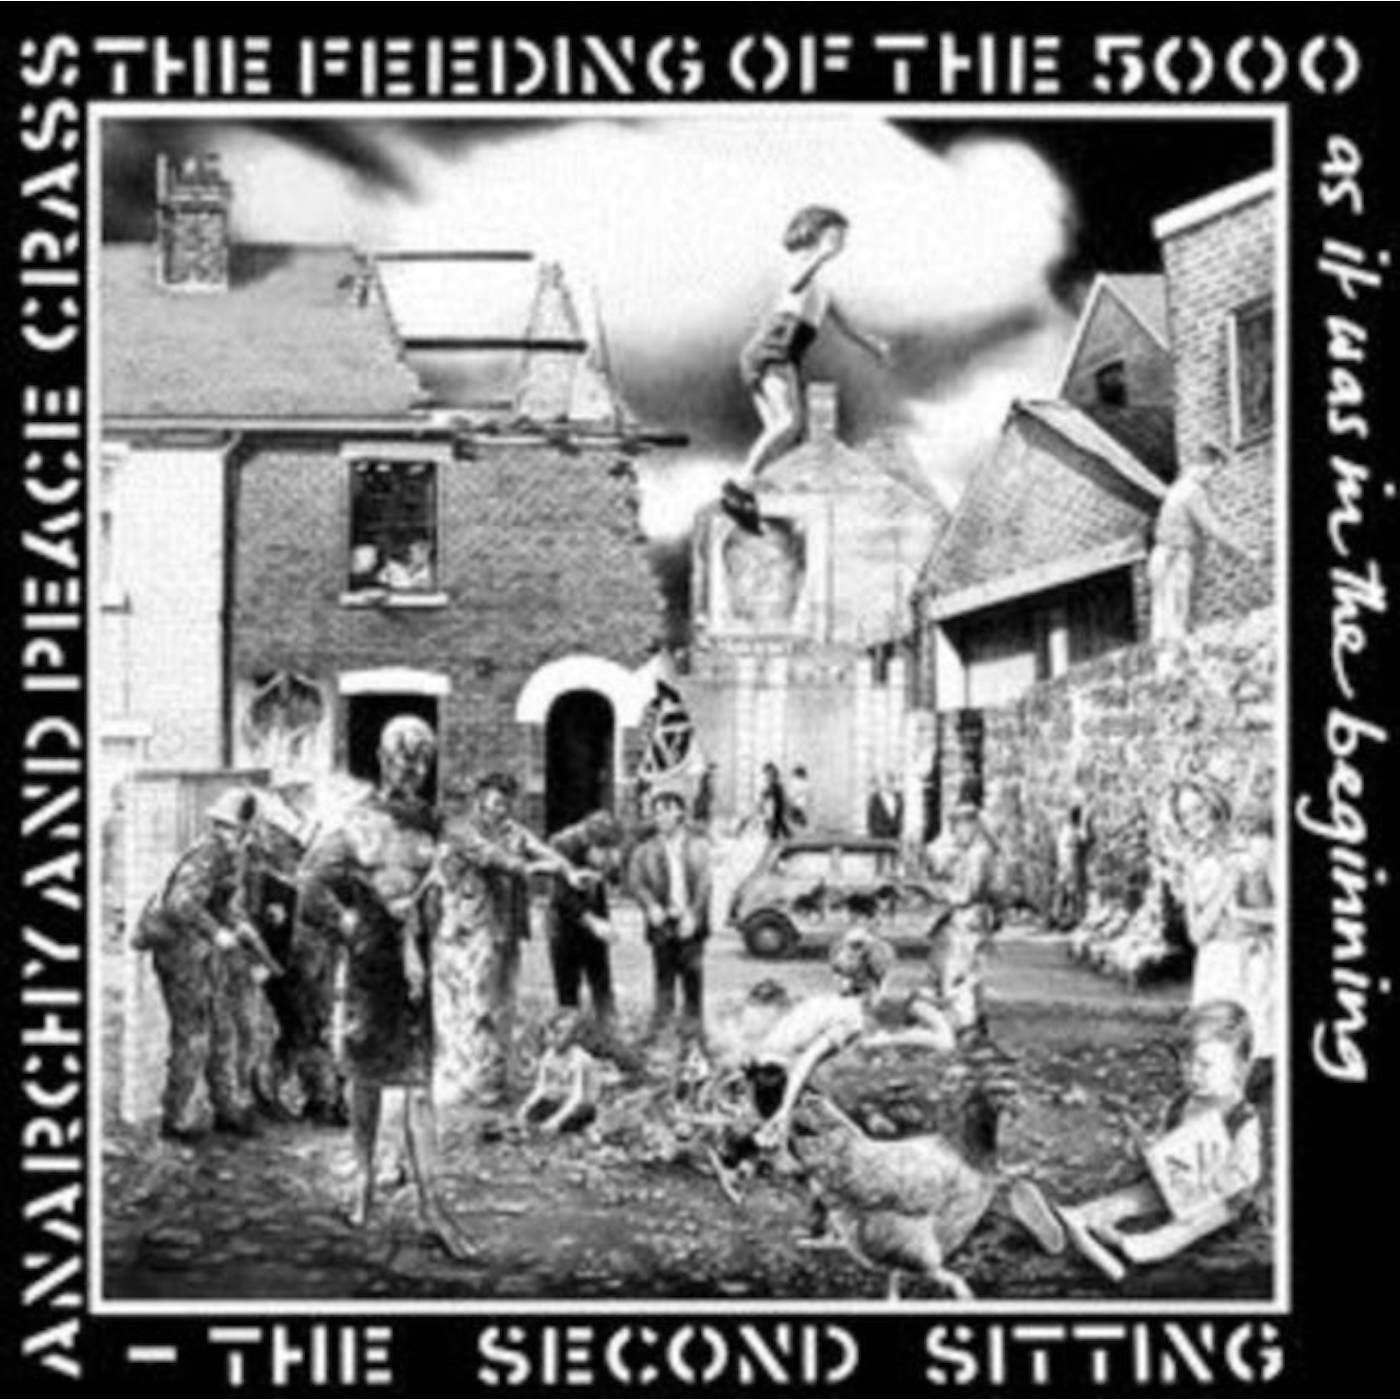 Crass LP Vinyl Record - The Feeding Of The 5000